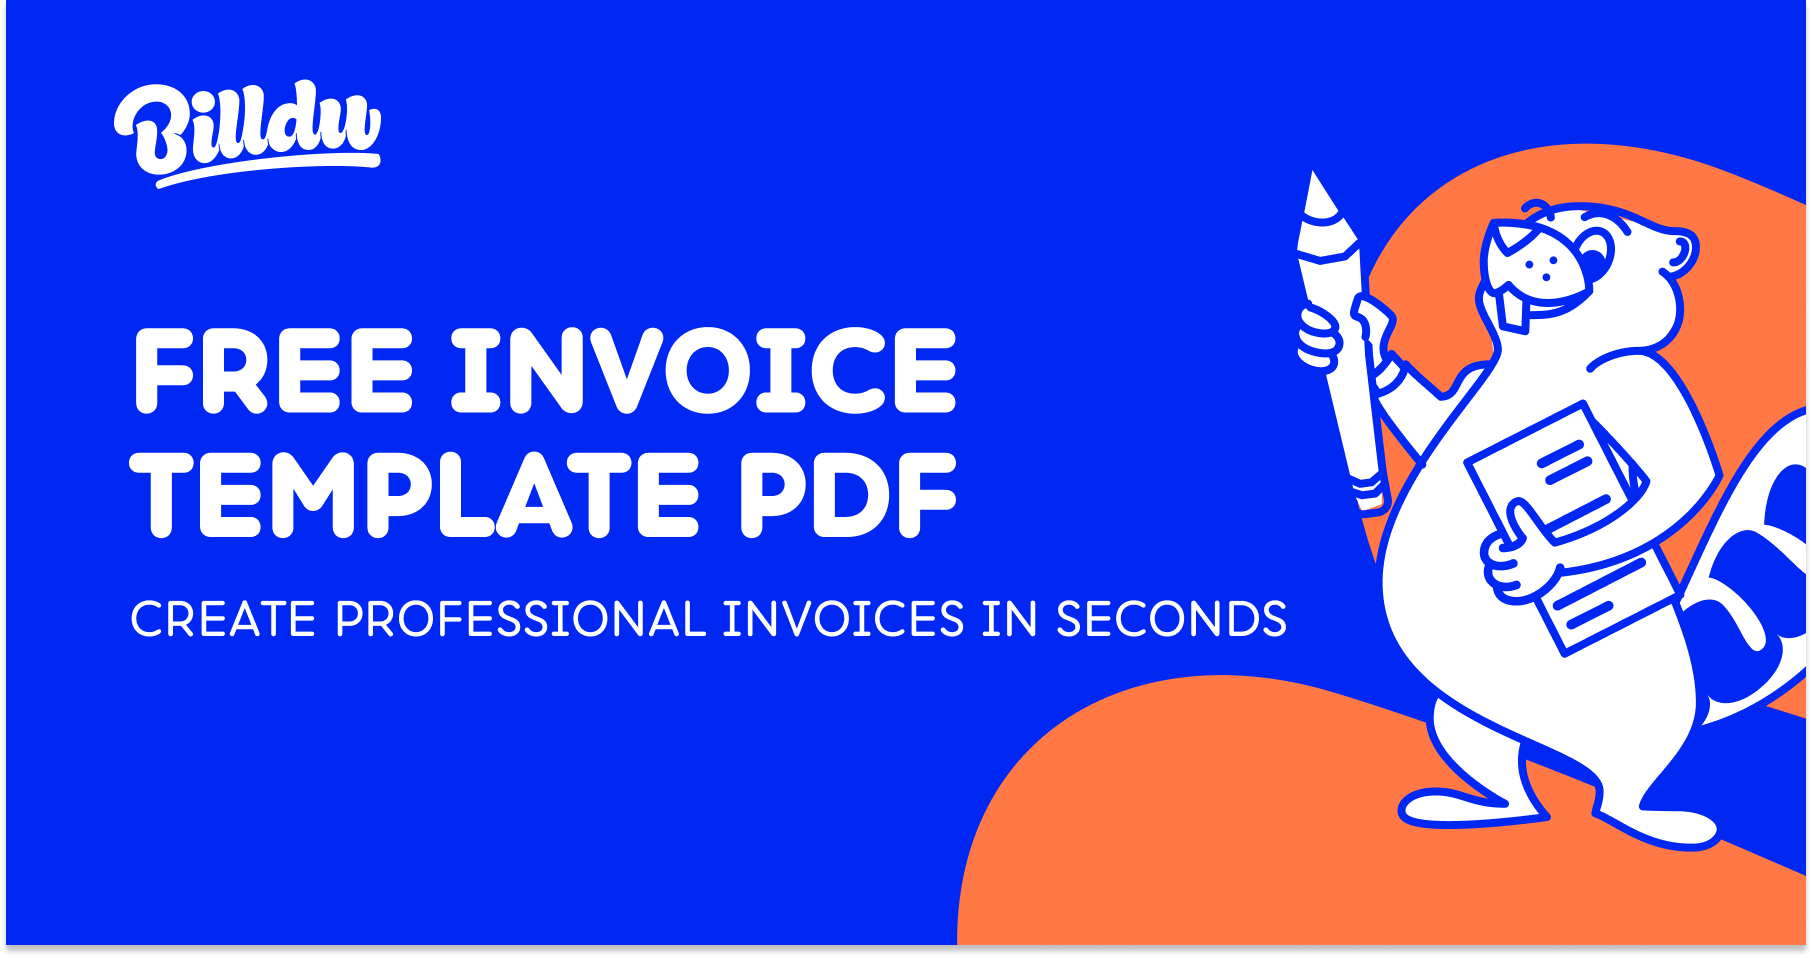 PDF Invoice Templates Free Download Billdu